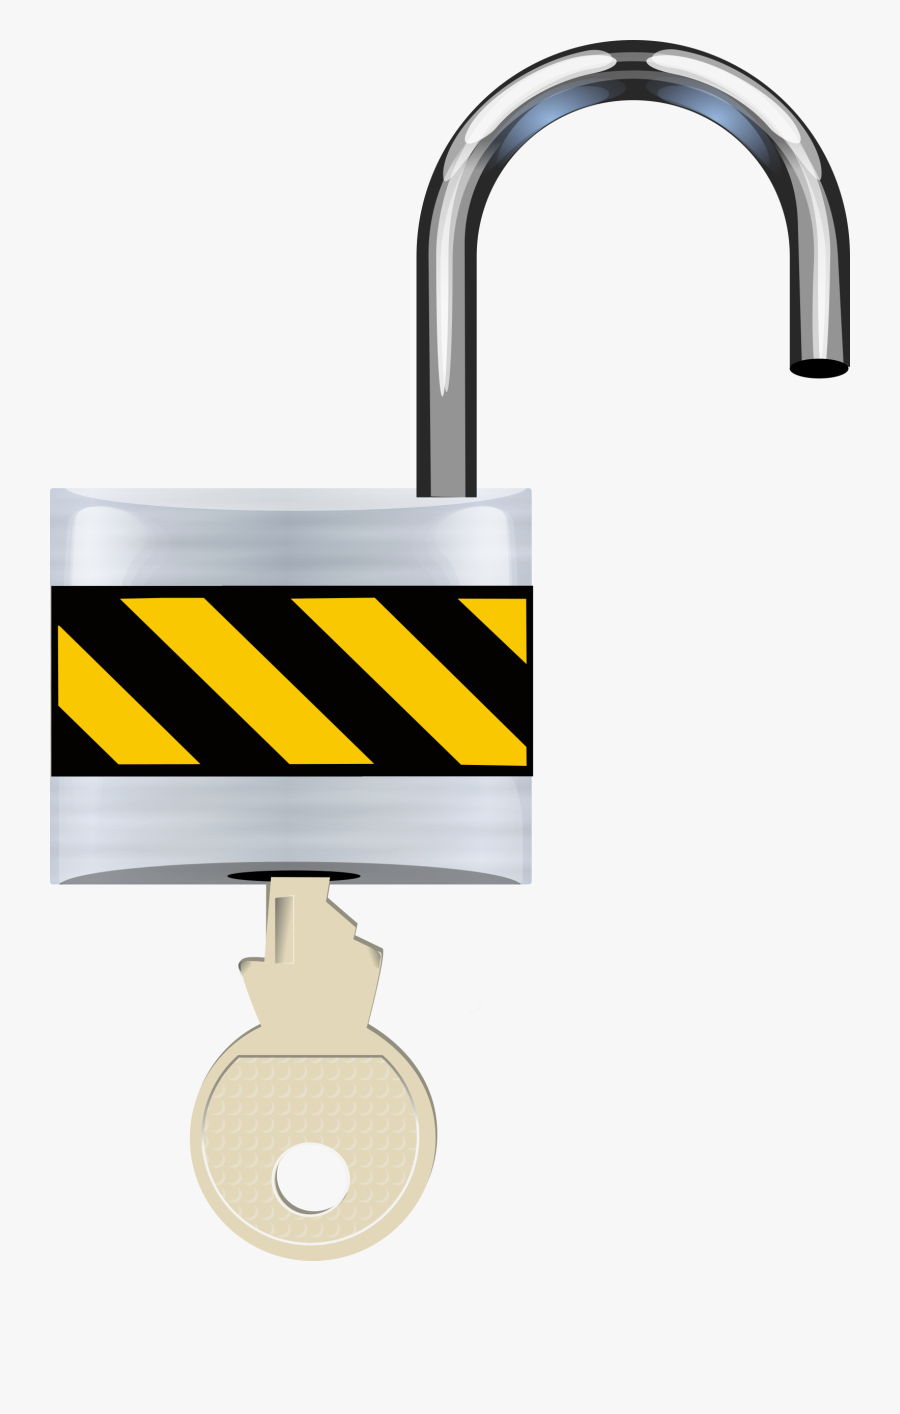 Padlock Open Clip Art - Open Lock Transparent Background, Transparent Clipart